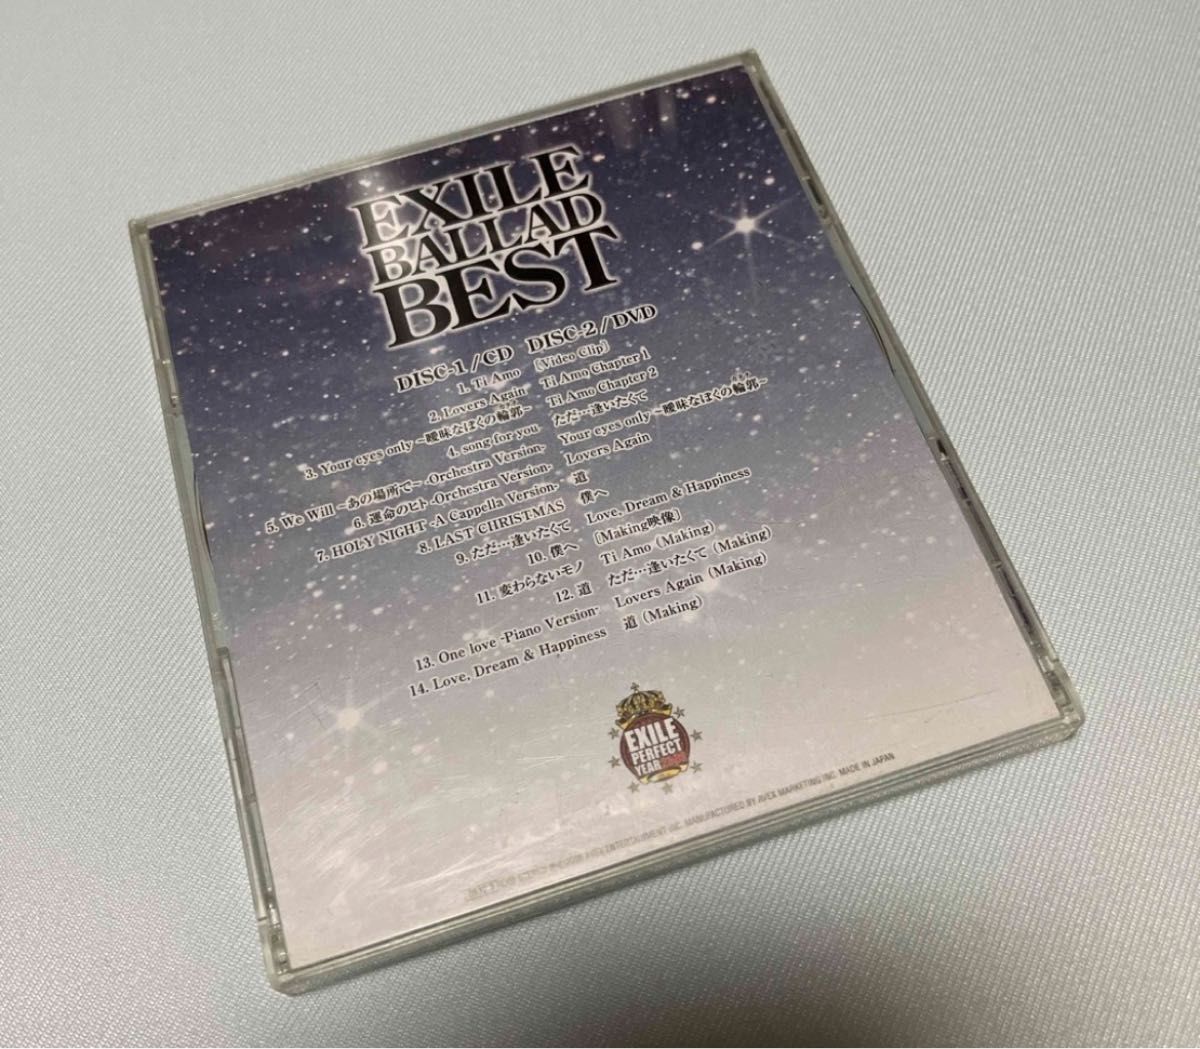 DVD付き初回盤 EXILE BALLAD BEST ベストアルバム CD